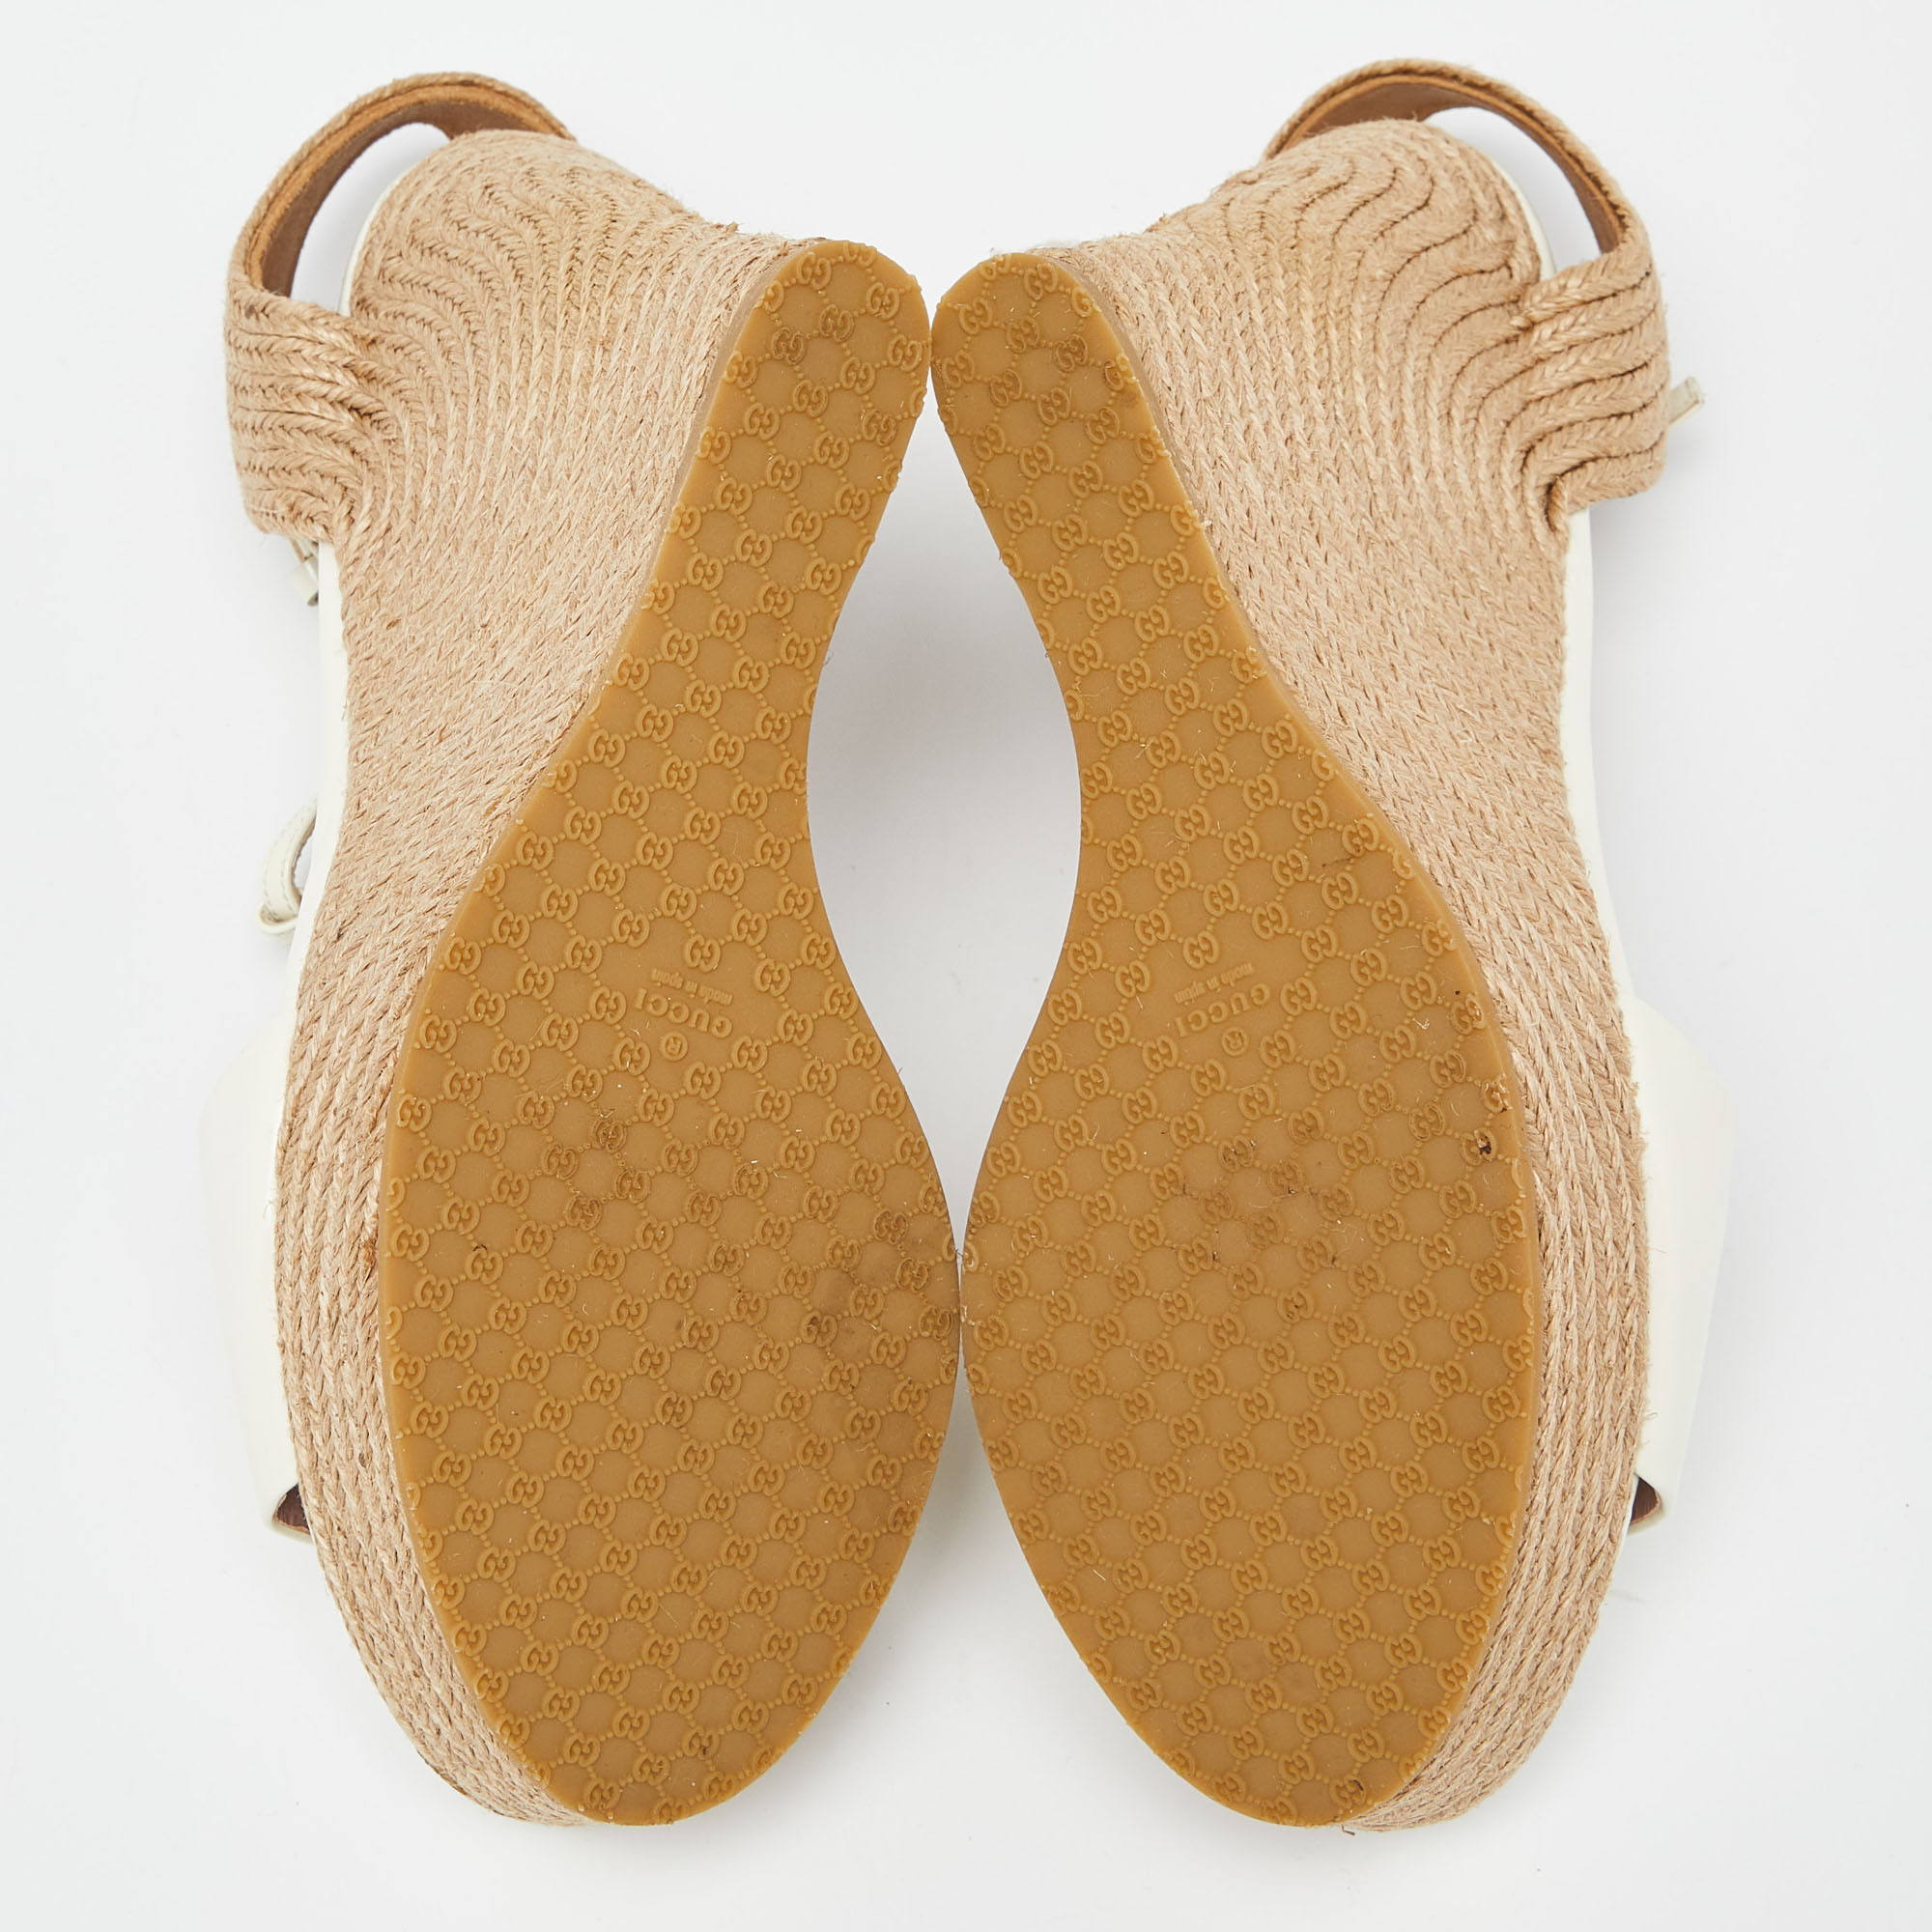 Gucci Off White/Beige Patent Leather Horsebit Wedge Espadrille T- Strap Platform Sandals Size 39.5